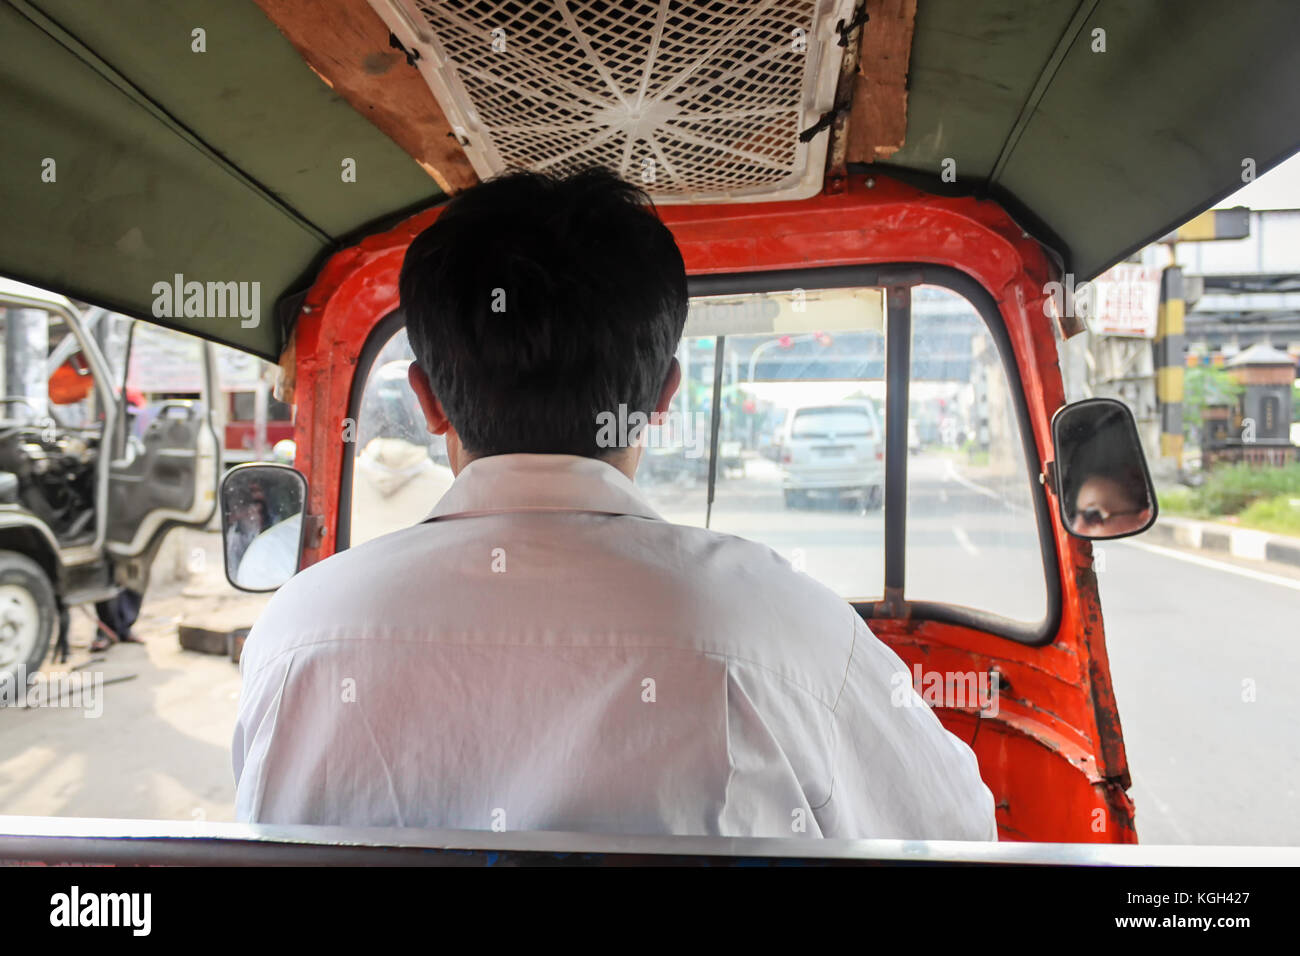 Driver driving tuk tuk - auto rickshaw , small vehicle typical for Jakarta, Indonesia Stock Photo